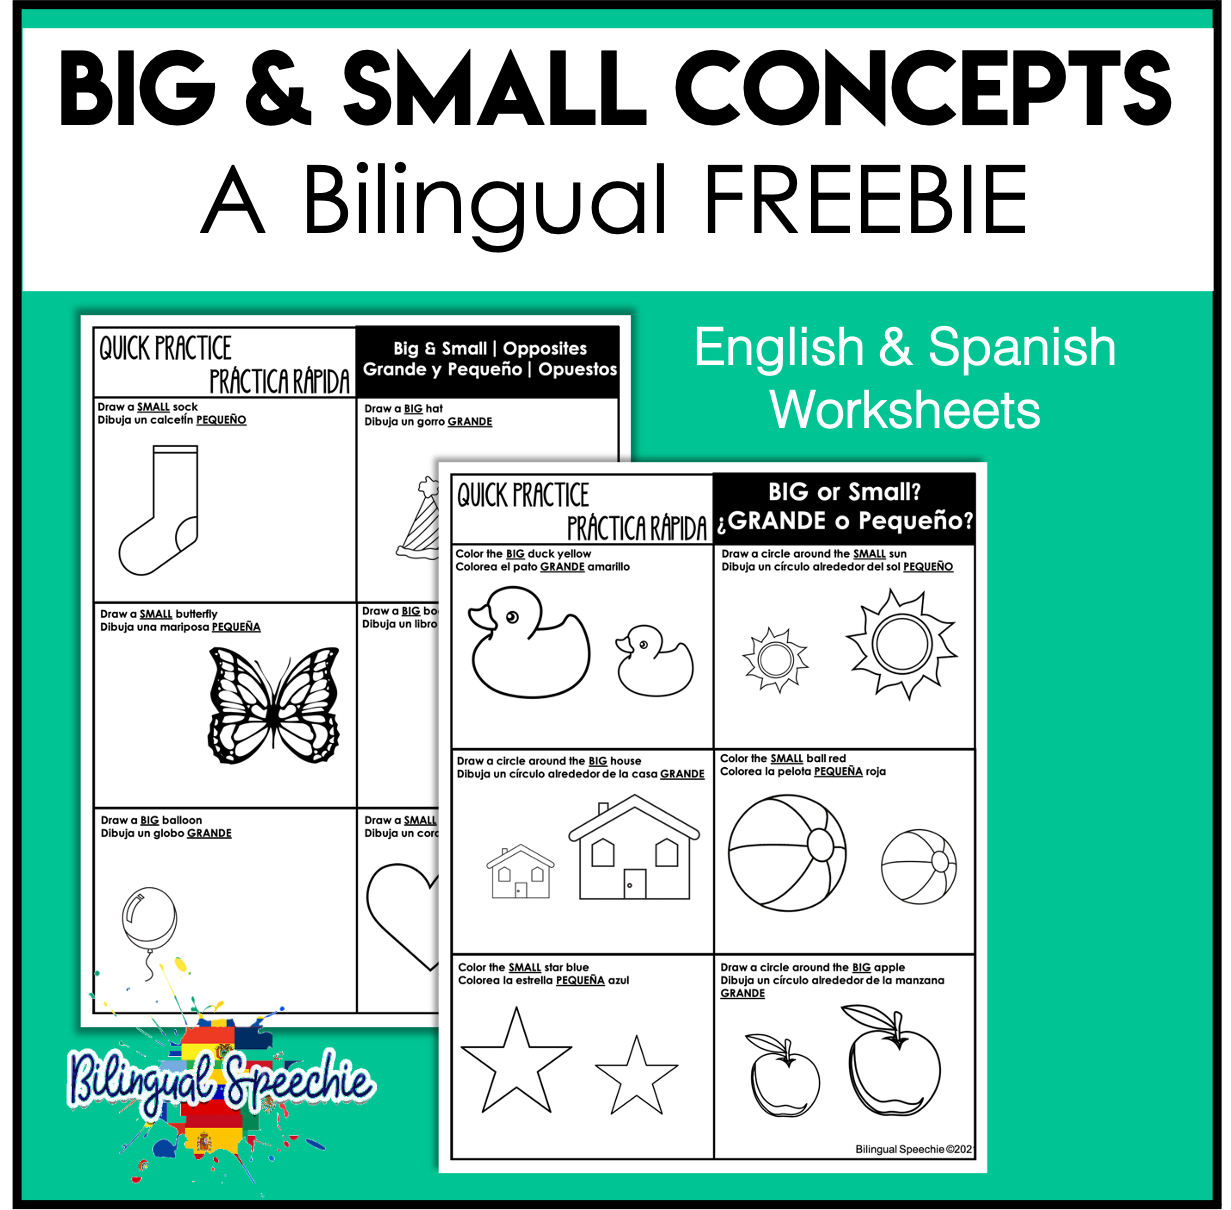 Big & Small Concepts | Bilingual FREEBIE